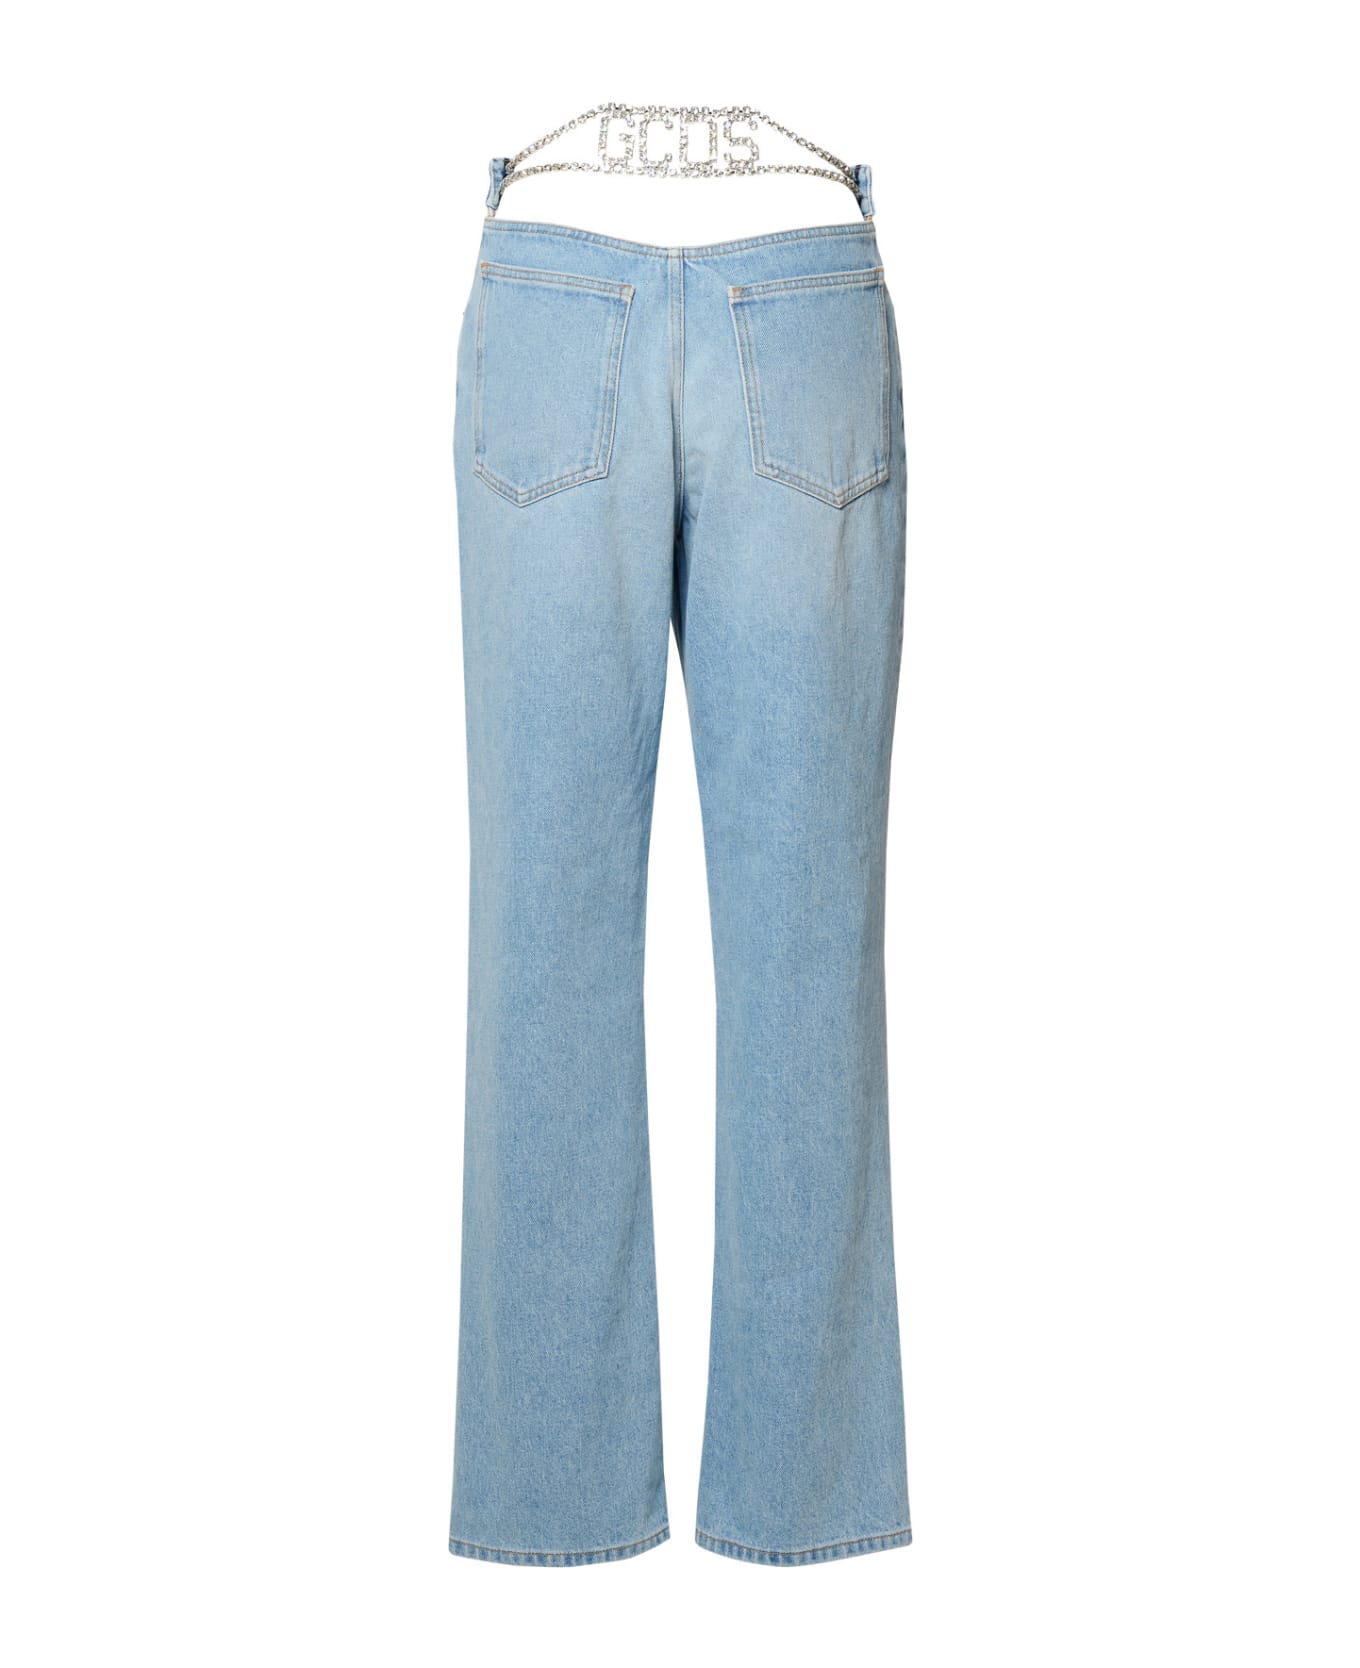 GCDS Light Blue Cotton Jeans - Light Blue デニム